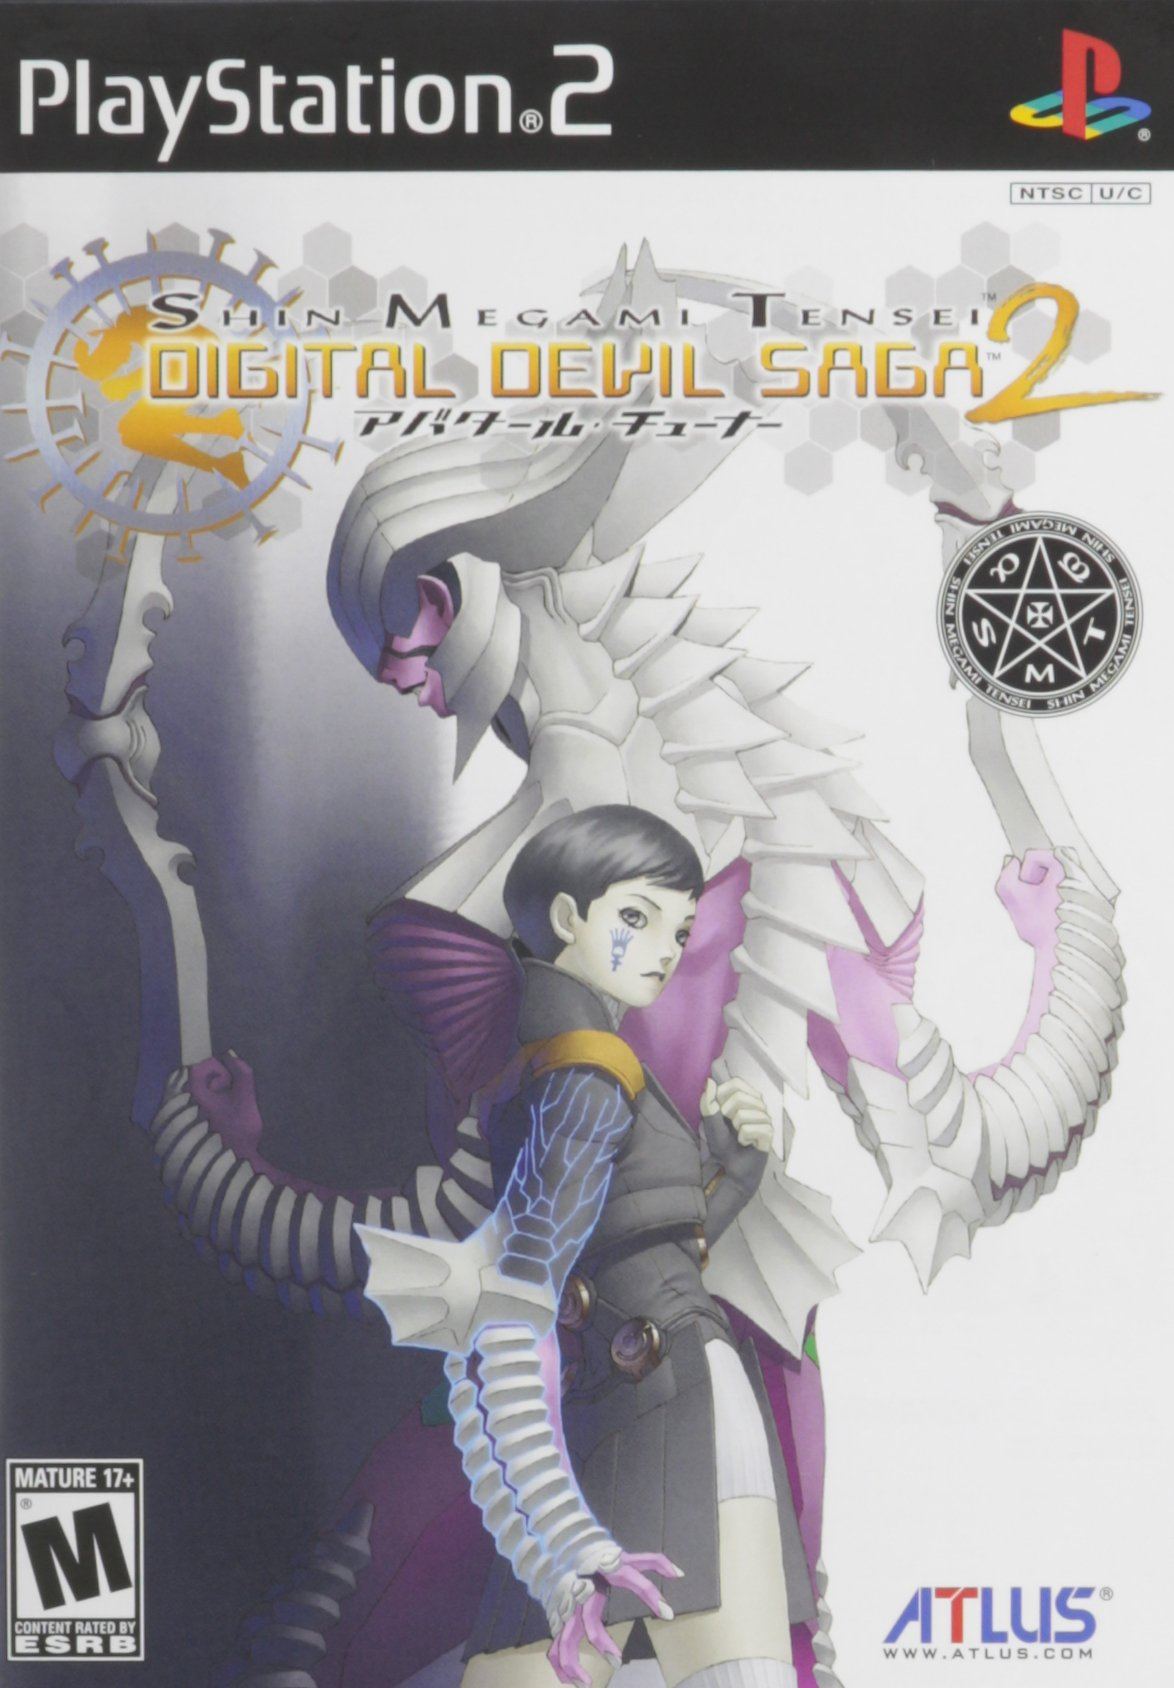 Shin Megami Tensei: Digital Devil Saga 2 for PlayStation 2